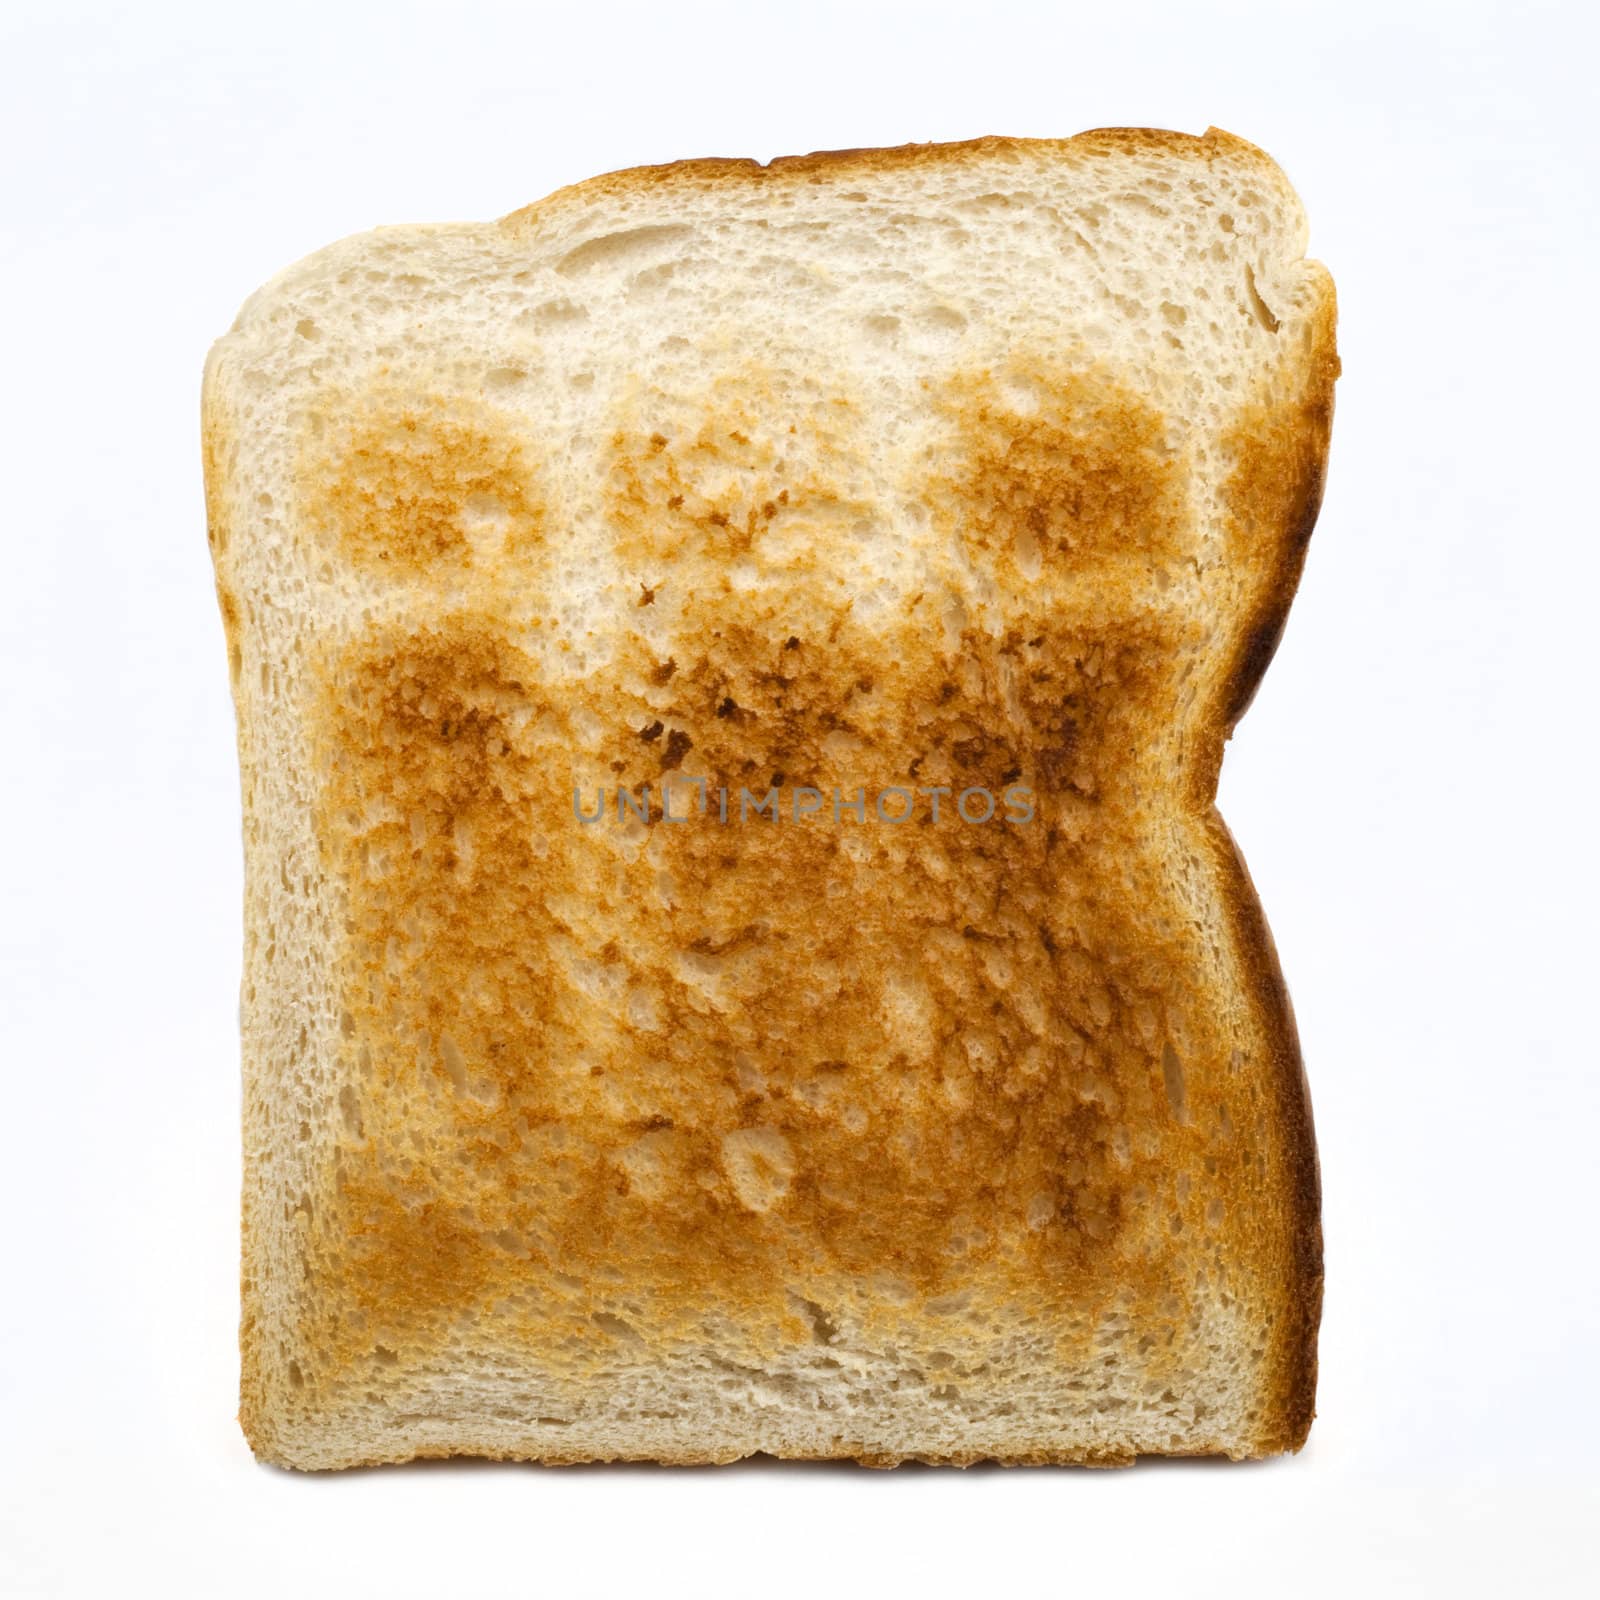 Toast by chrisdorney